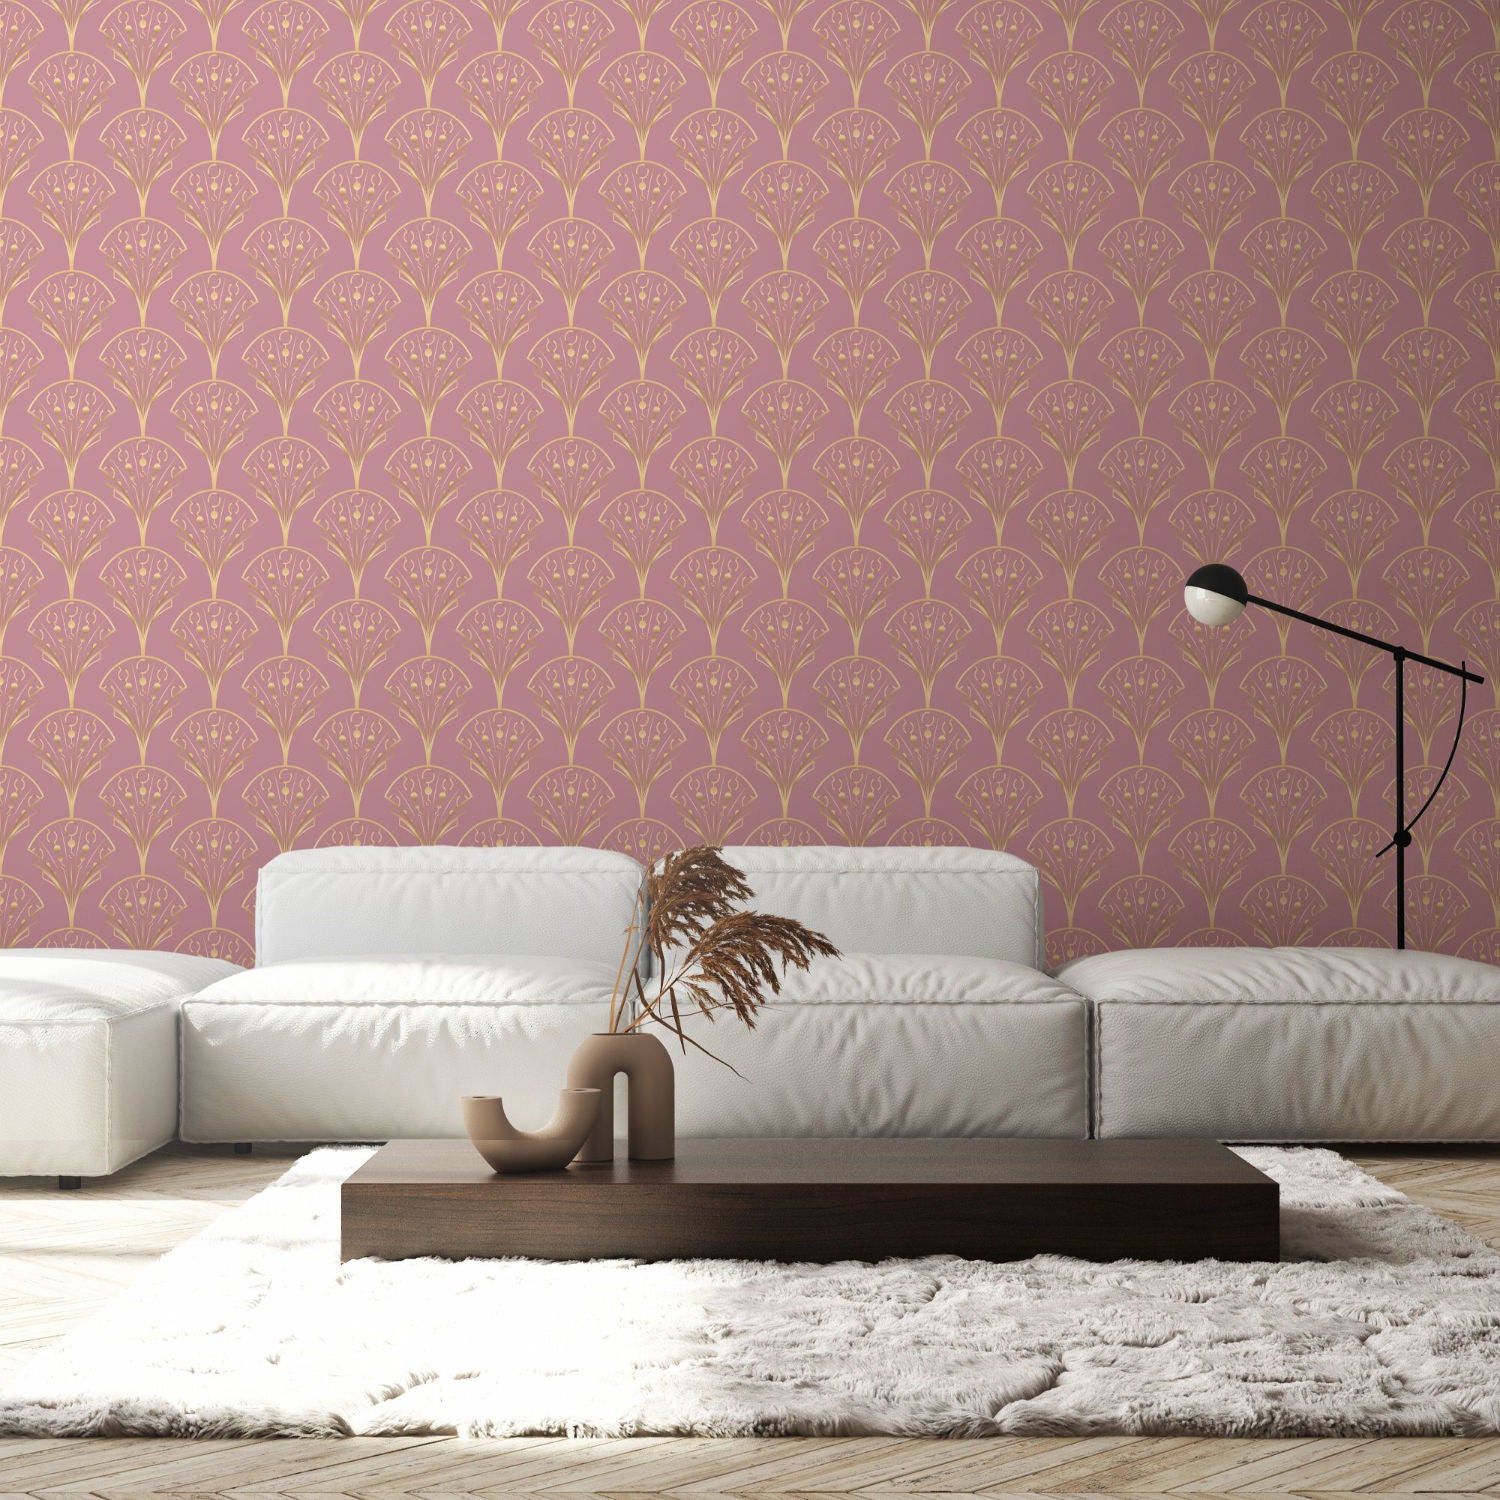 Fototapet vlies, Iconic Walls Adeline Powder Pink ICWLP00132, 312 x 270 cm